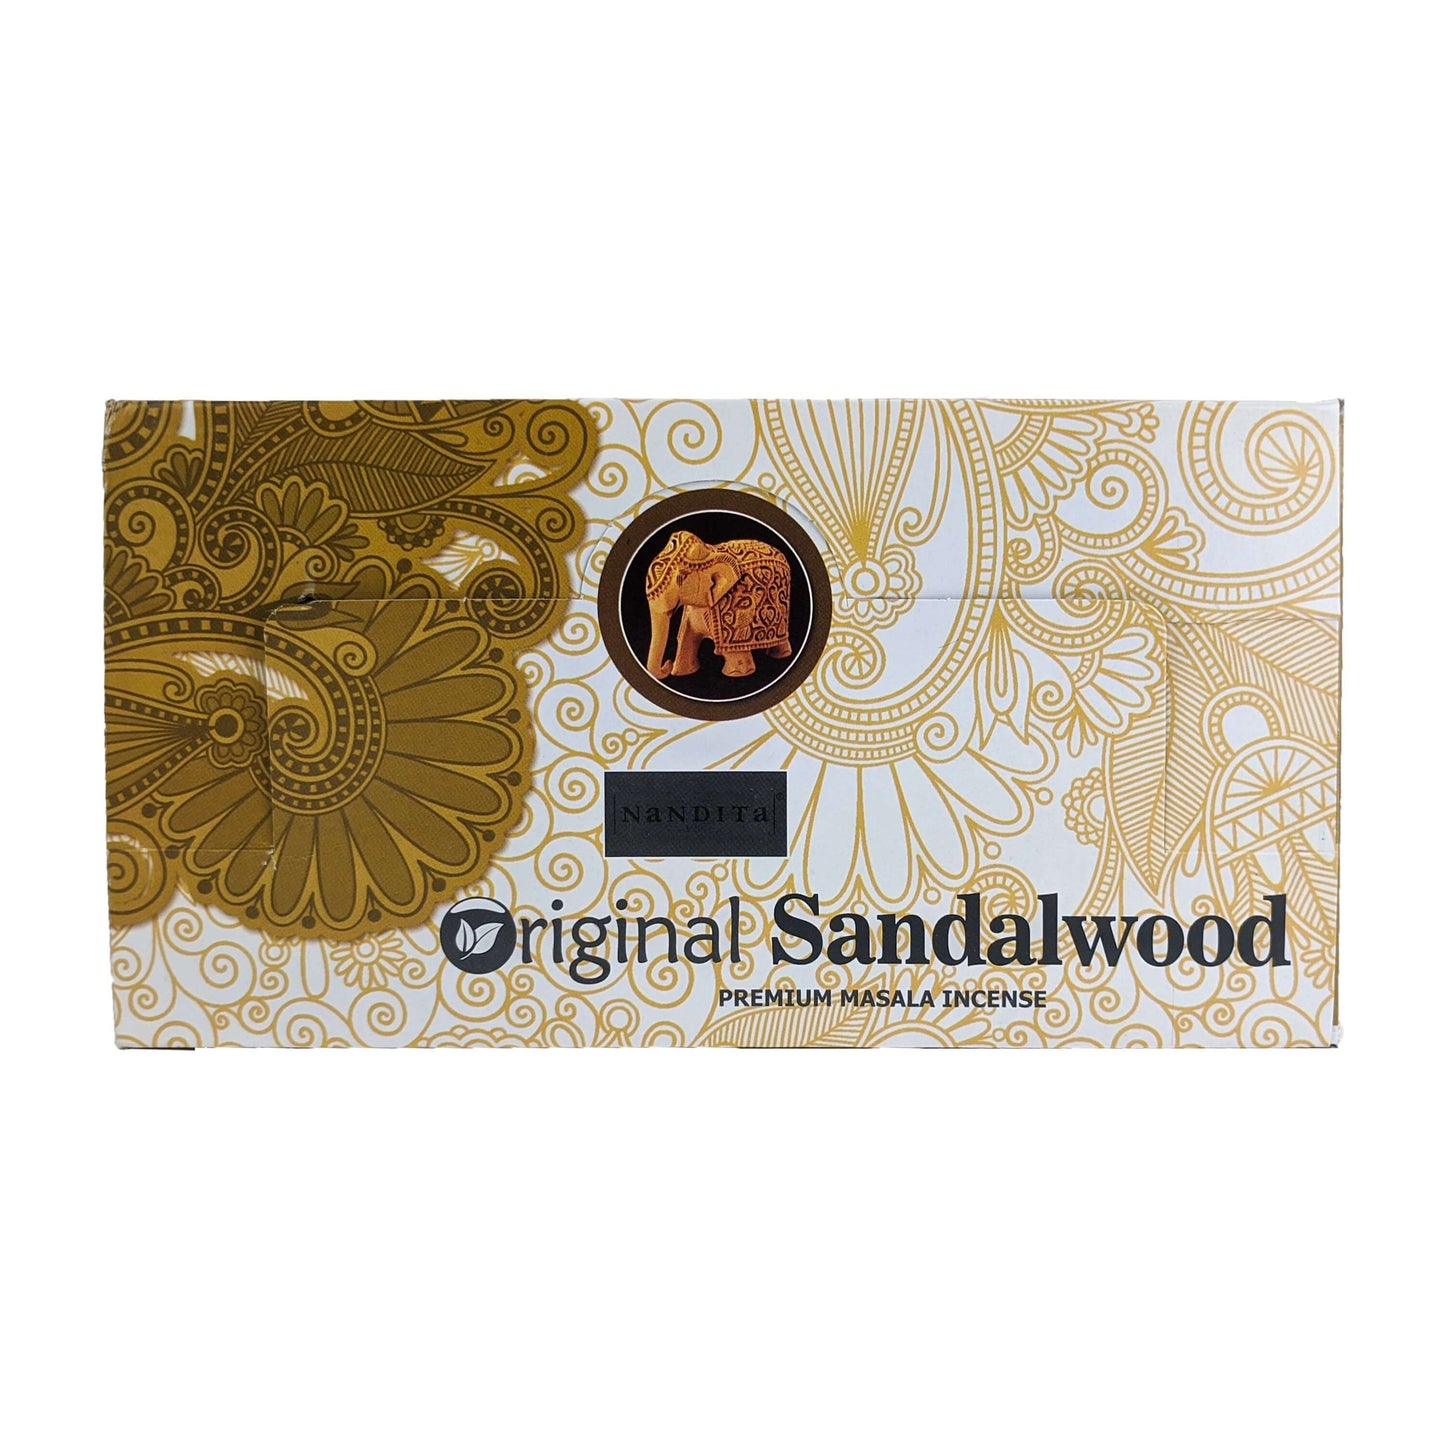 Nandita Original Sandalwood Incense Sticks, 15g Pack